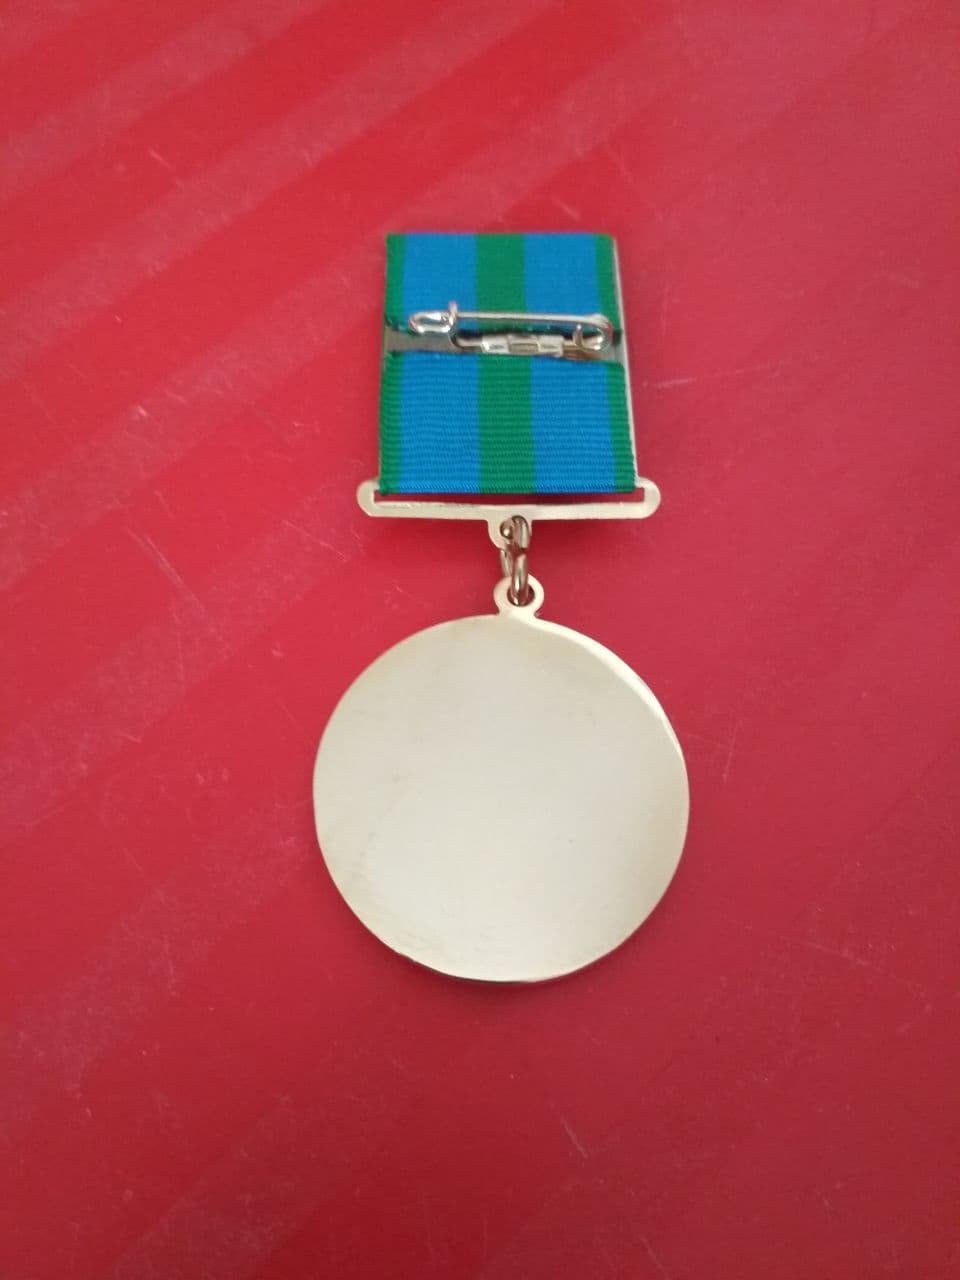 Медаль "Жена десантника'